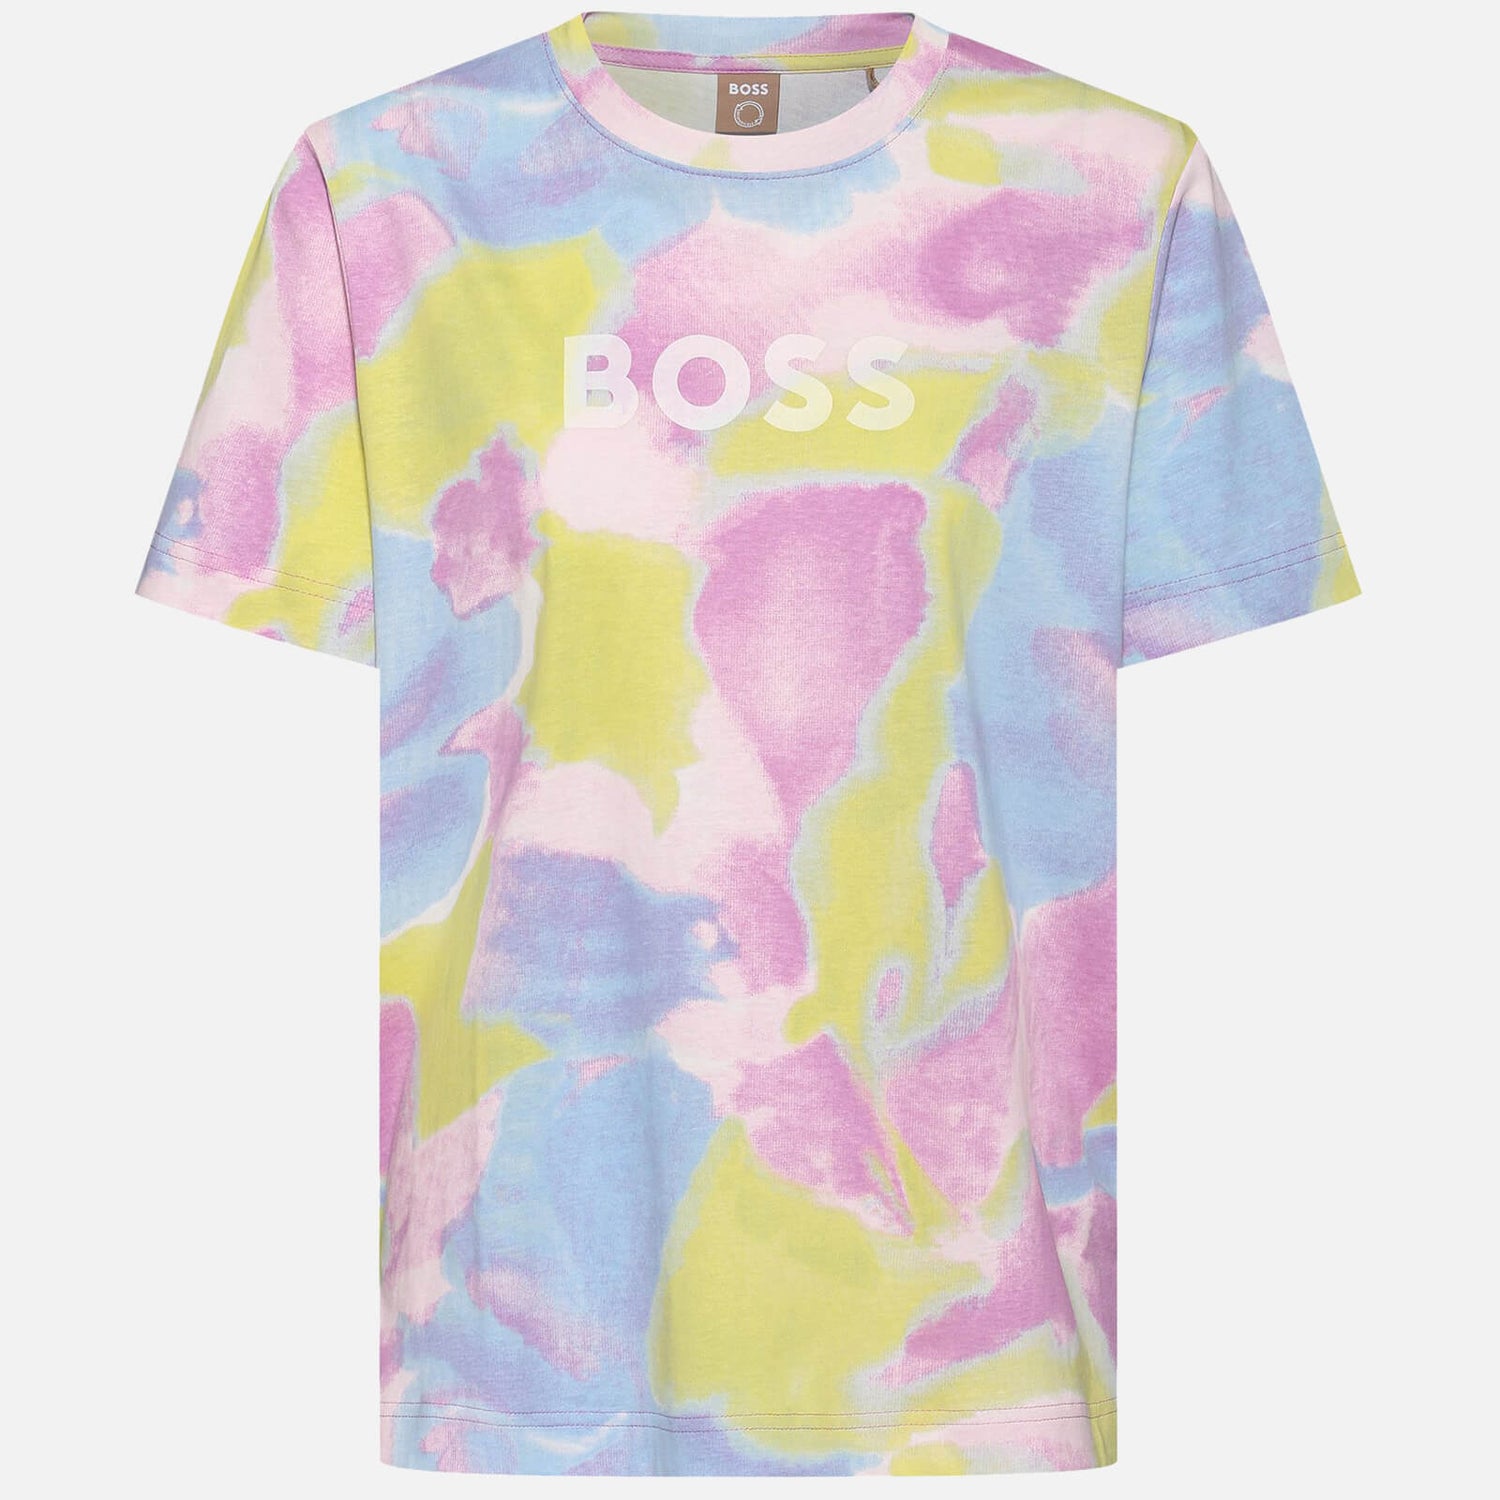 BOSS Women's Ecosa T-Shirt - Open Miscellaneous - S